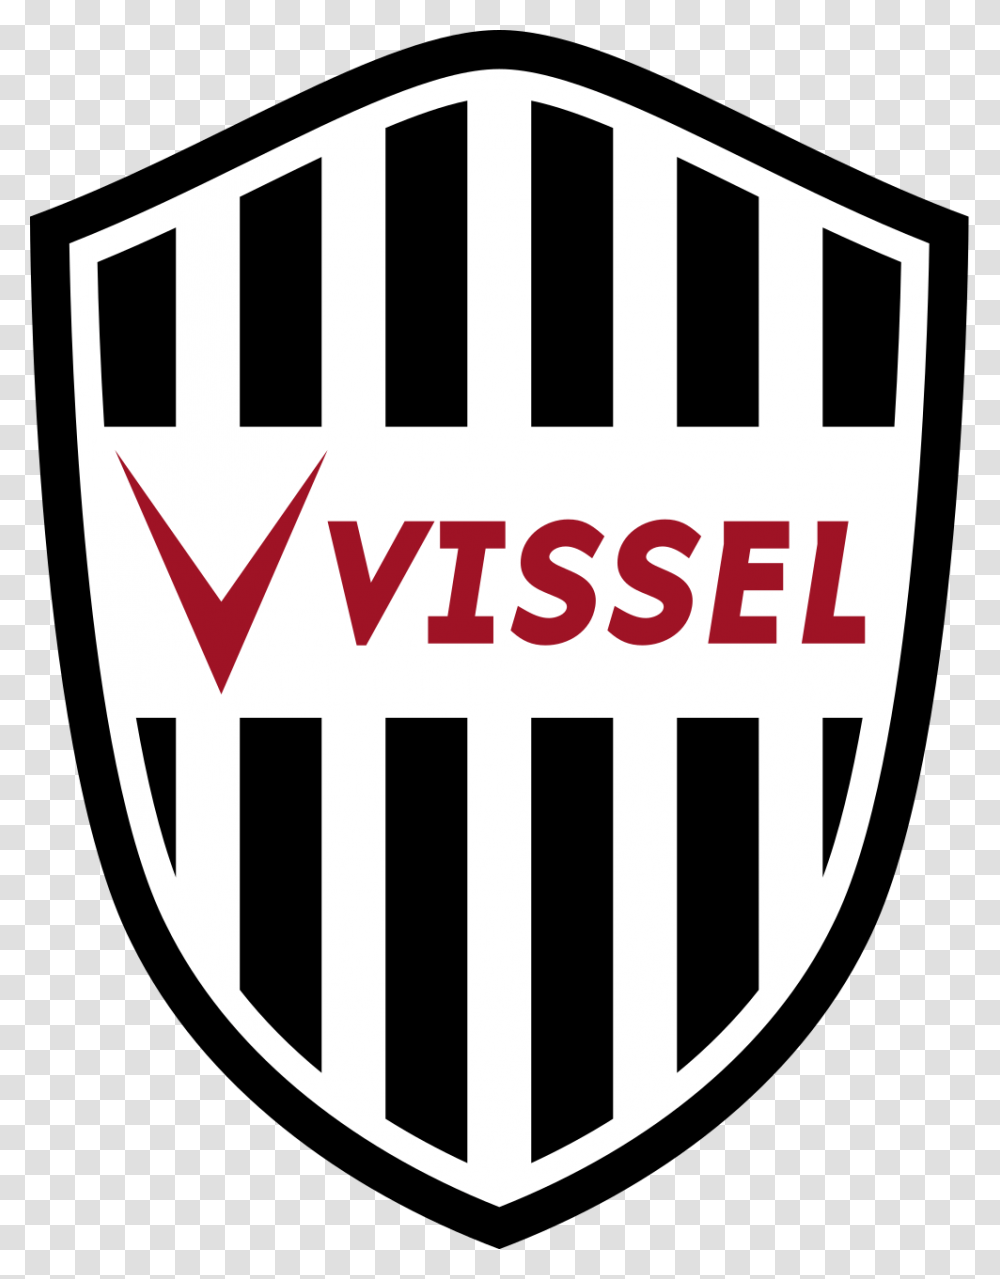 Dream League Soccer Logo Vissel Kobe, Armor, Shield Transparent Png